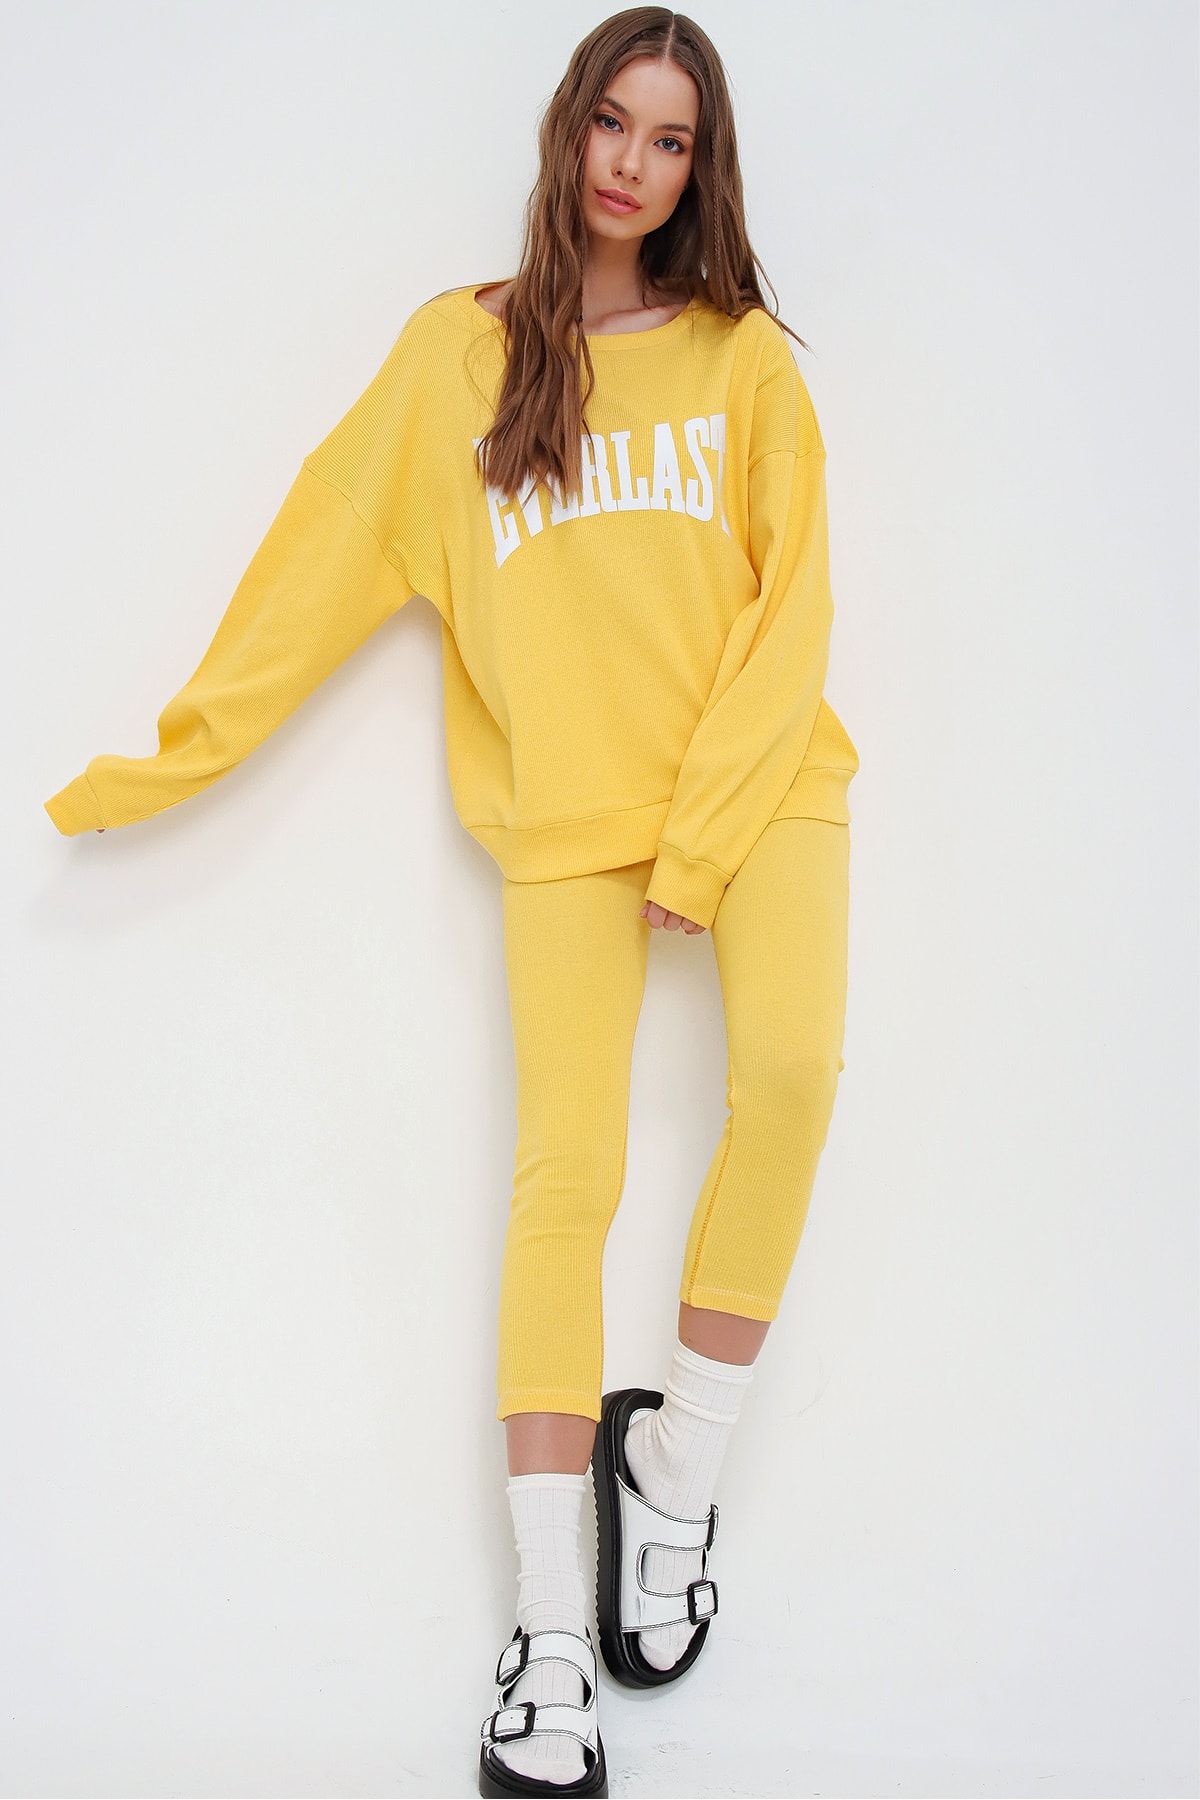 Trend Alaçatı Stili Kadın Sarı Sweatshirt Örme Tayt İkili Takım ALC-X5890